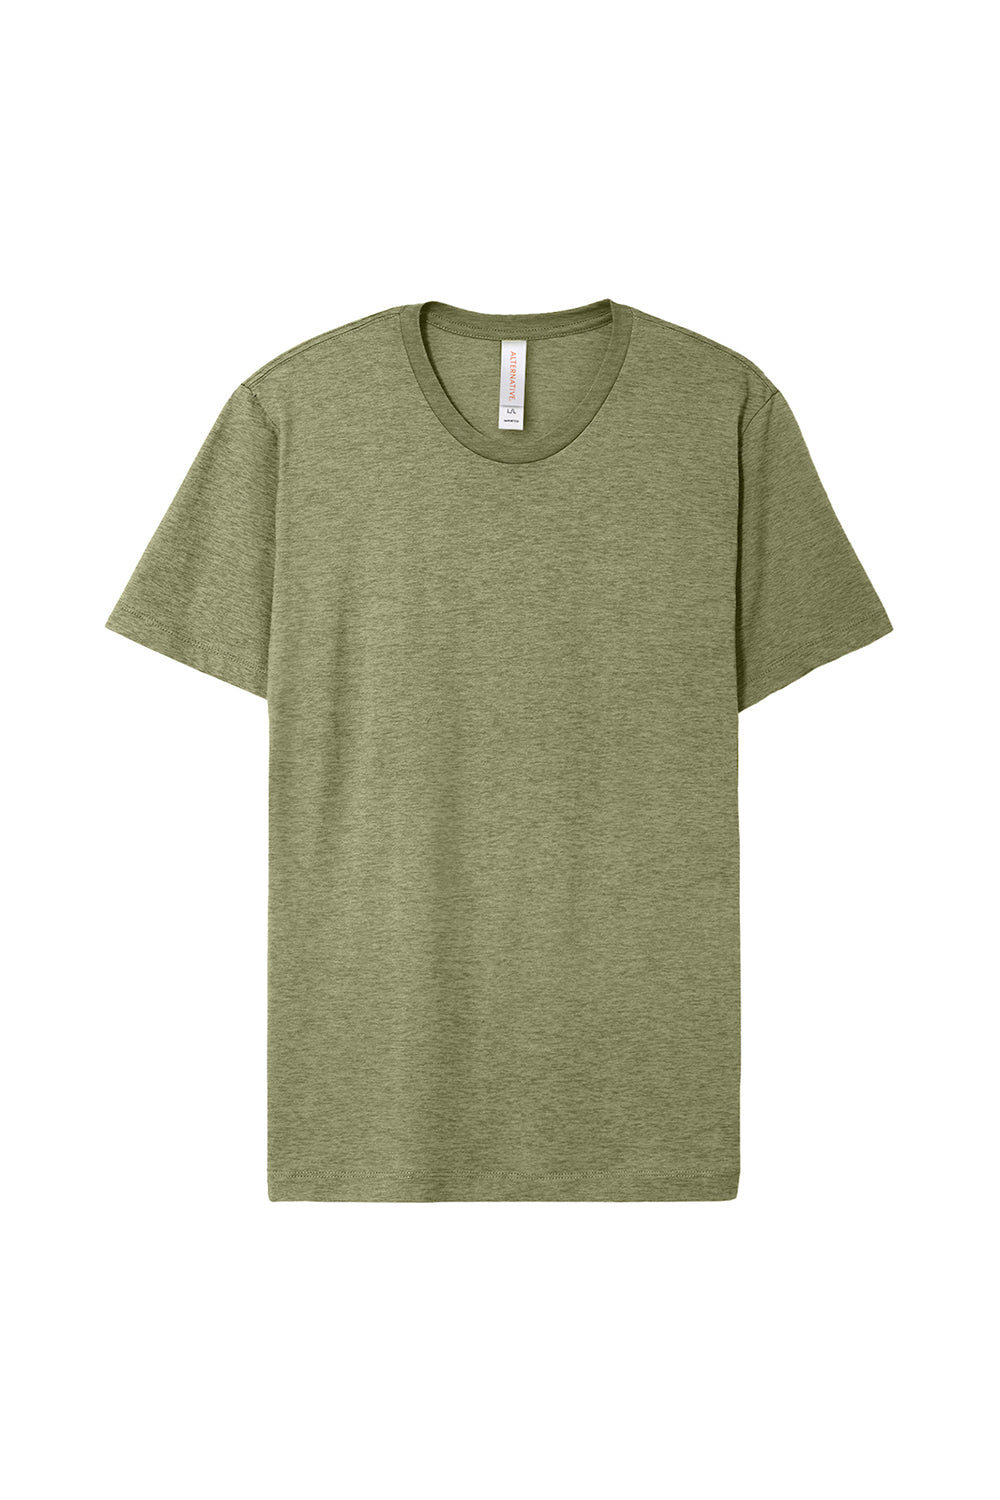 Alternative 1070CV Mens Go To Short Sleeve Crewneck T-Shirt Heather Military Green Flat Front